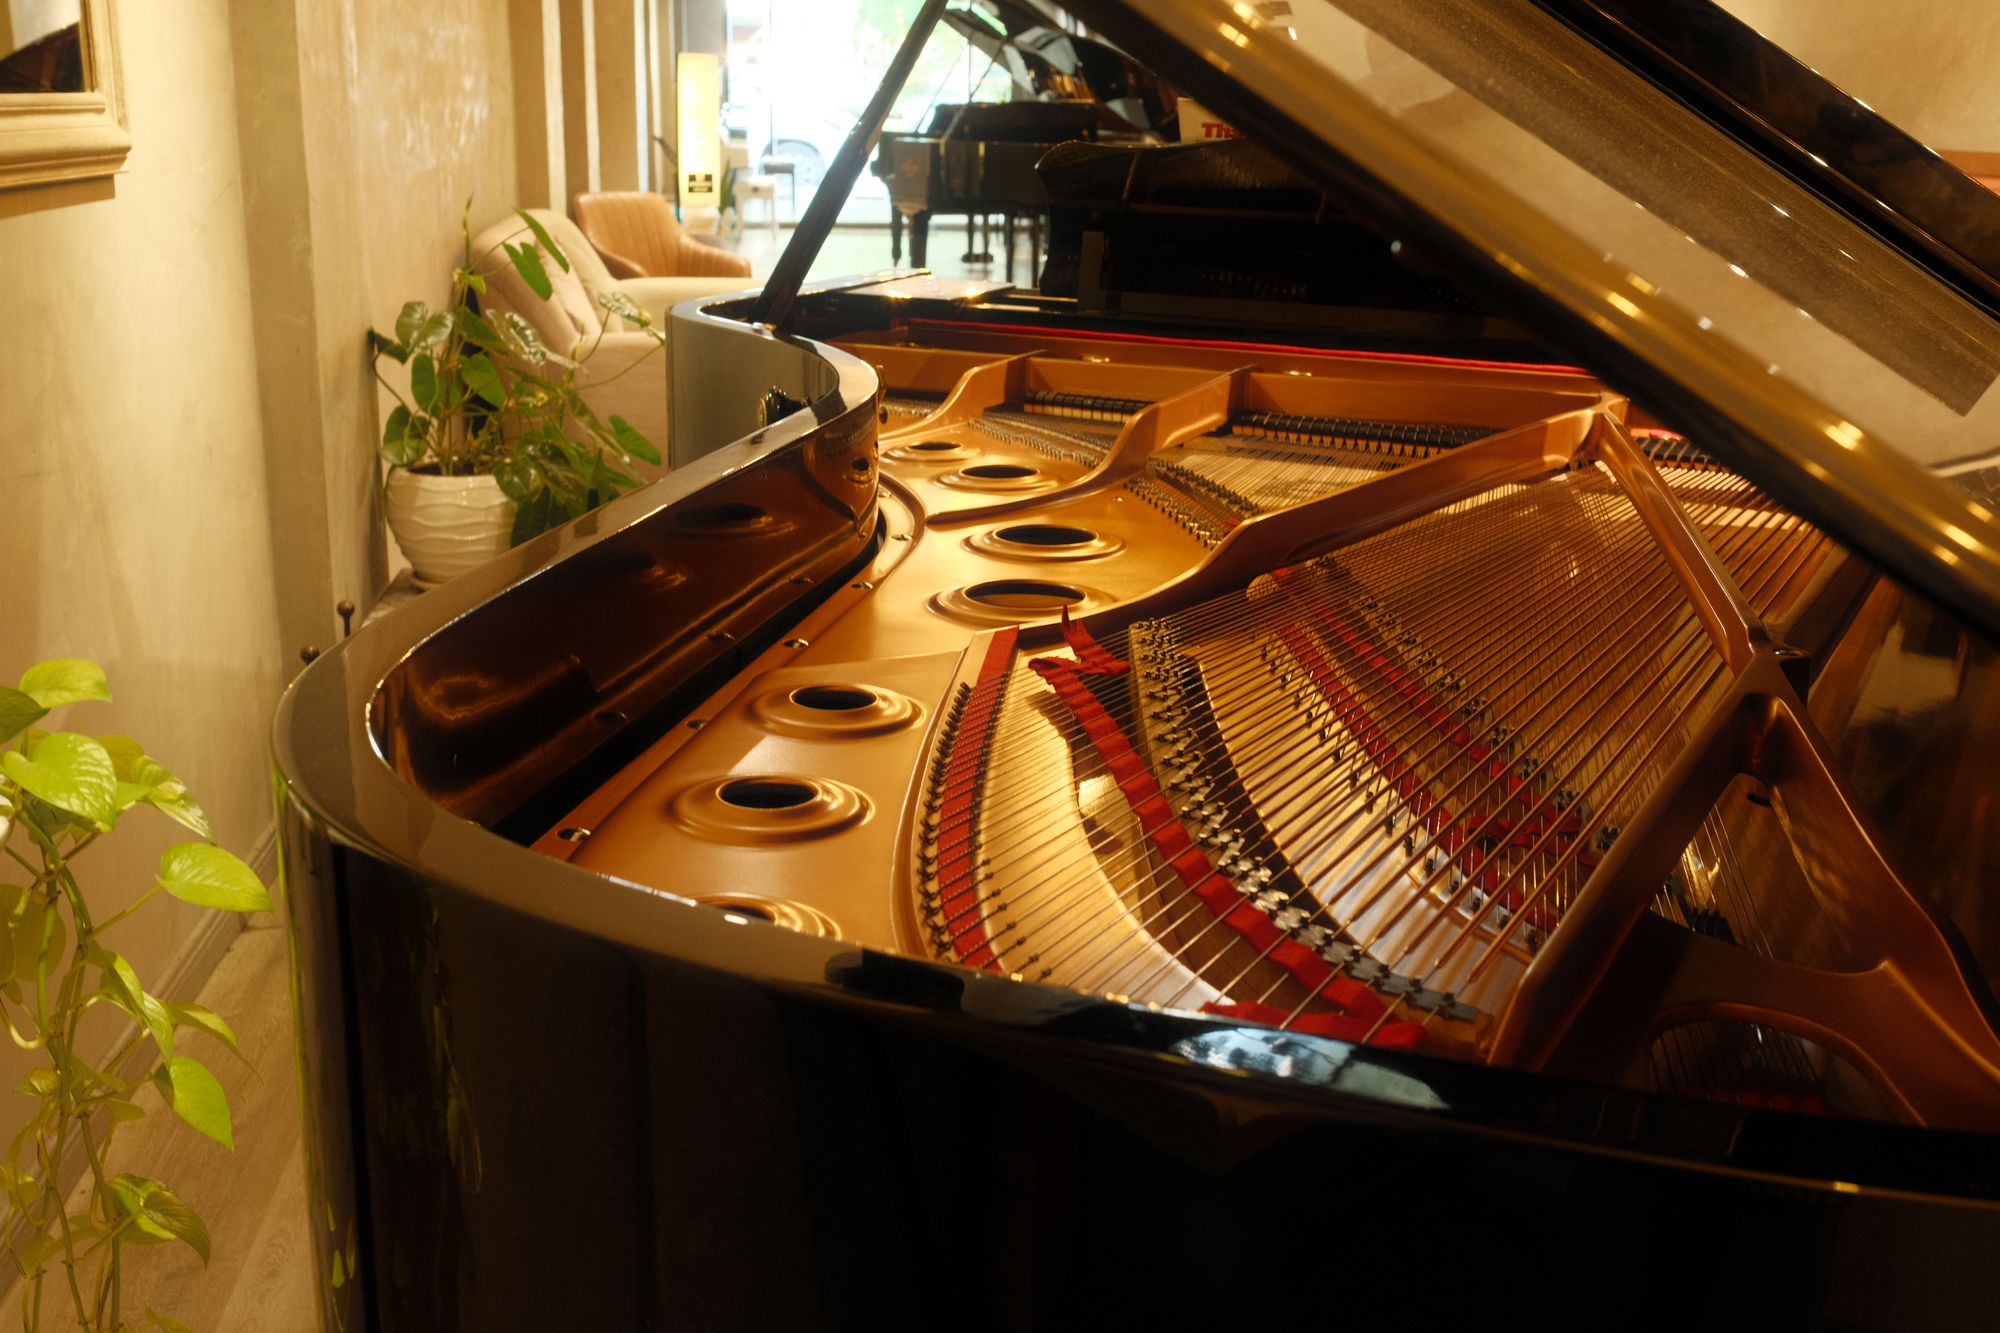 Largest Grand Piano in Cambodia – Yamaha CSII Grand Piano